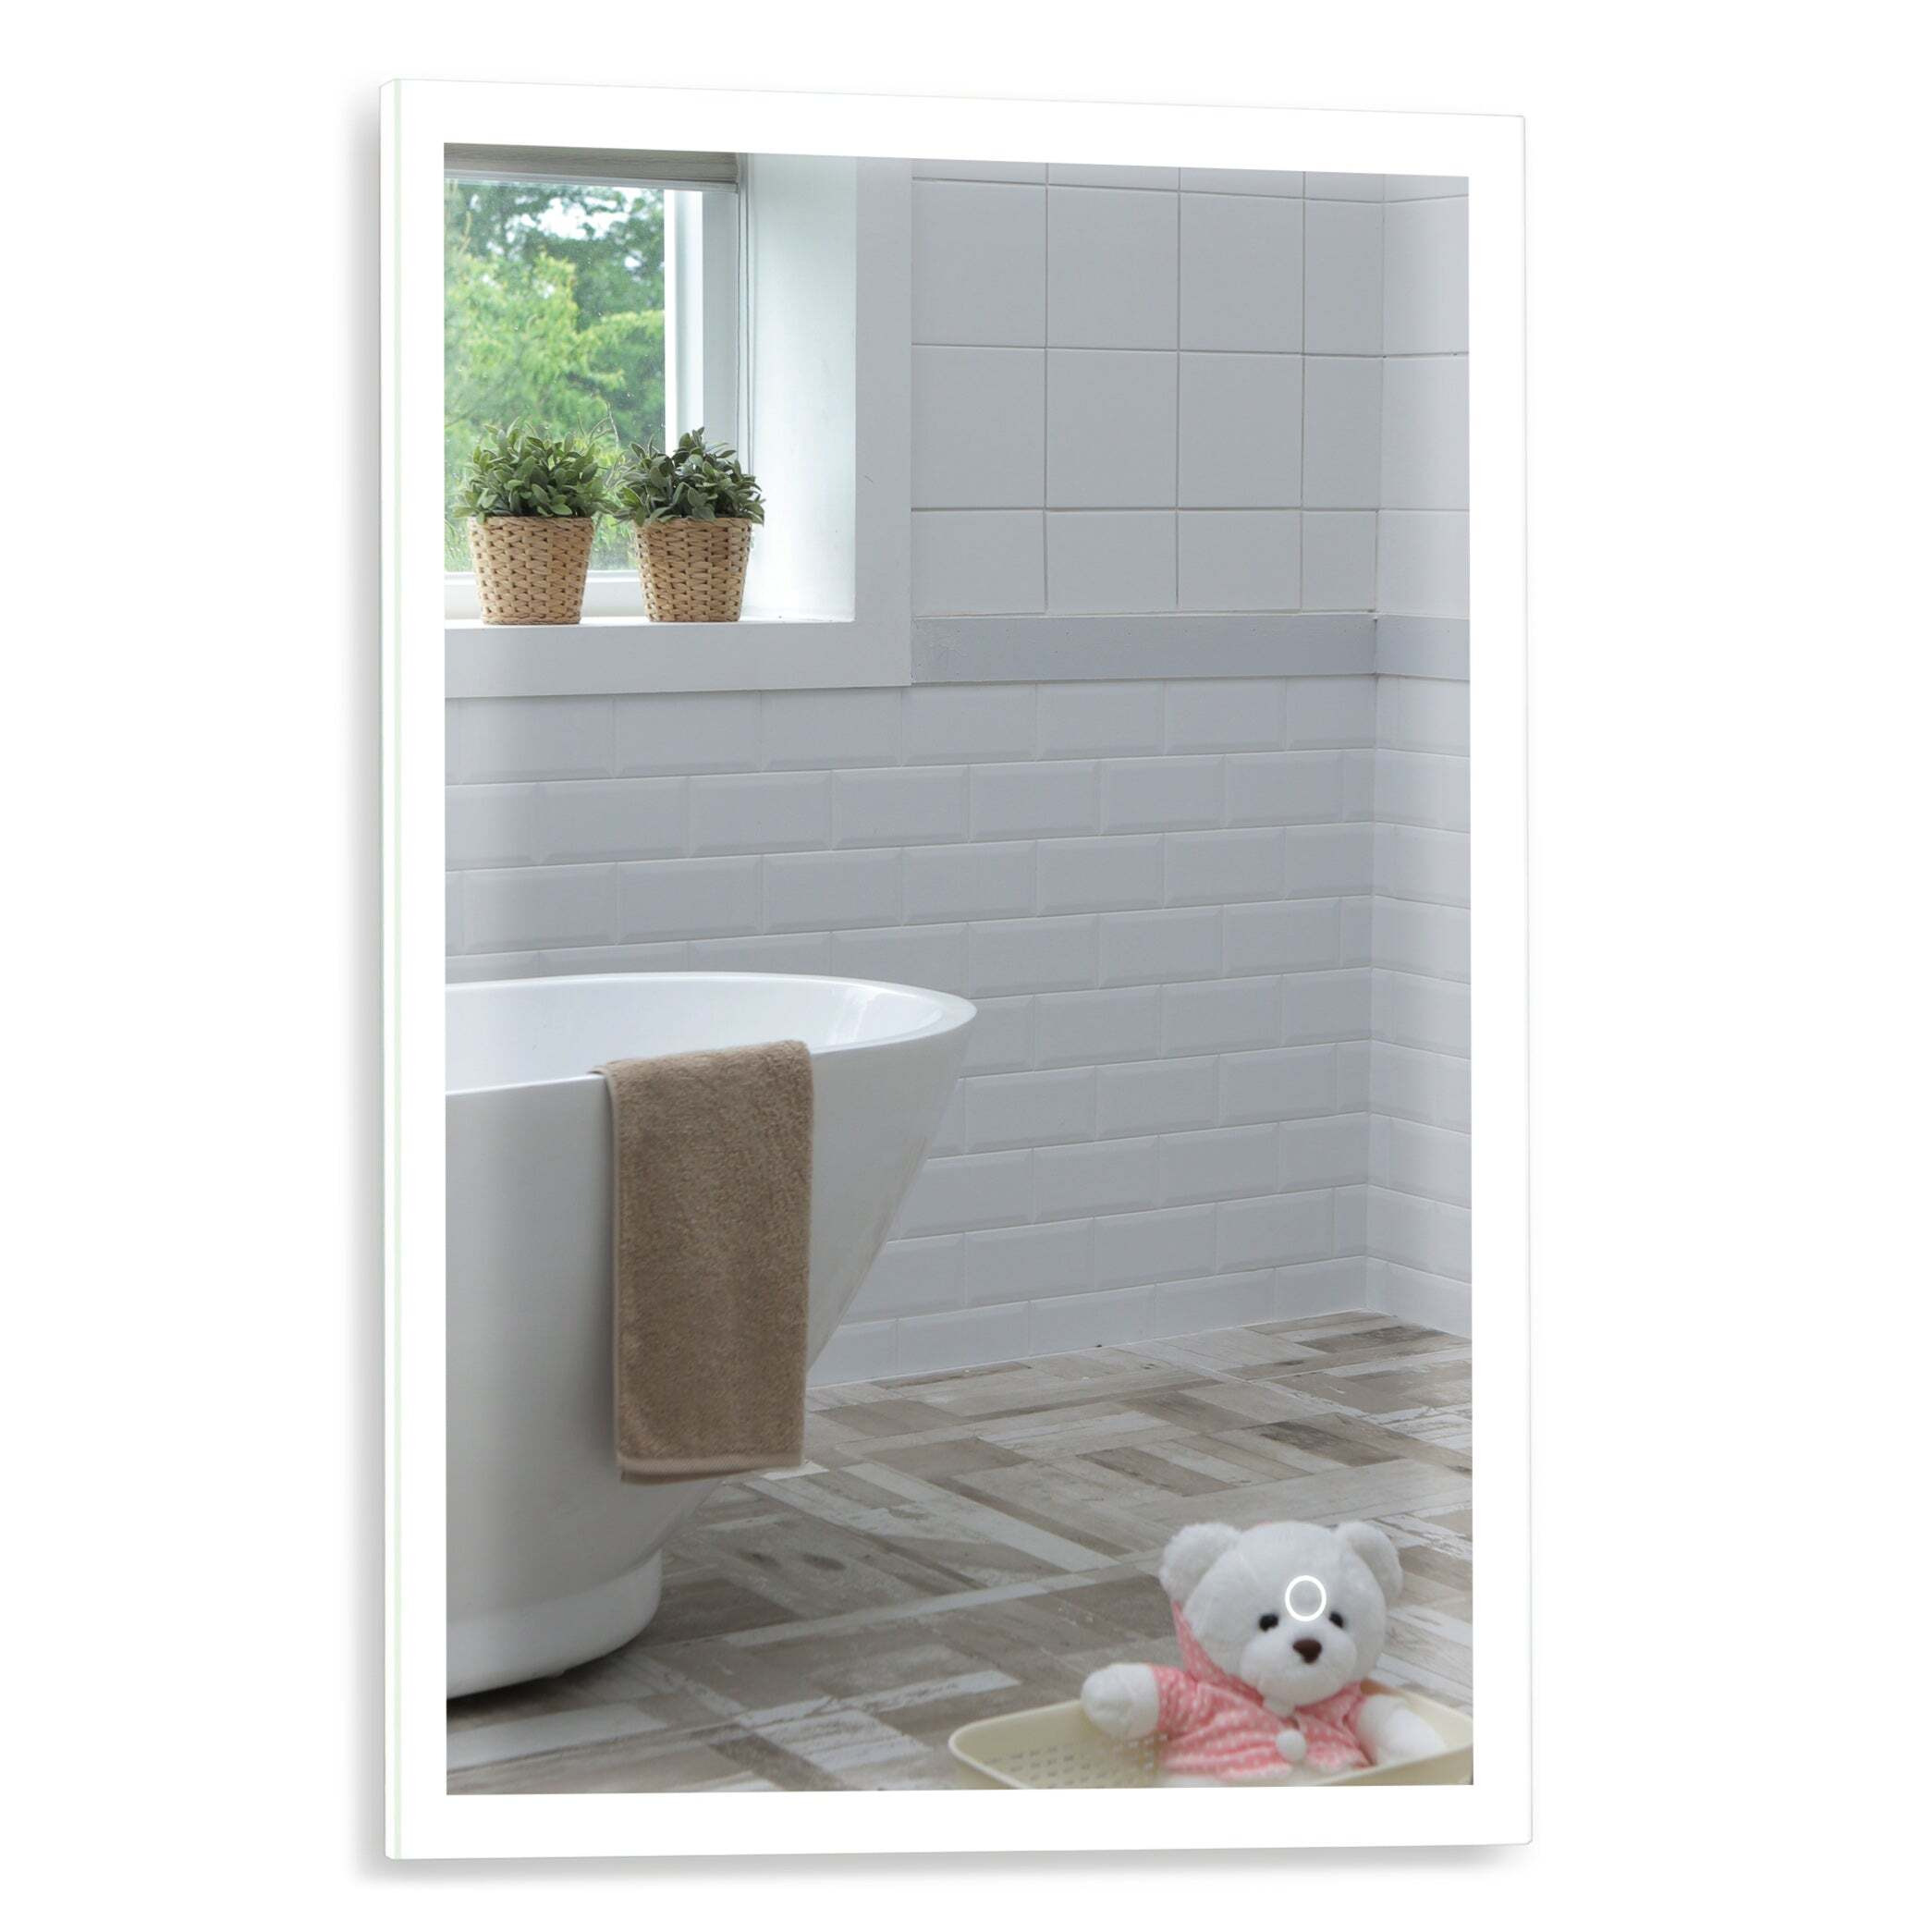 Antares LED Illuminated Bathroom Wall Mirror Warm/Cold LED's: Size 70Hx50Wx5.5Dcm LED41